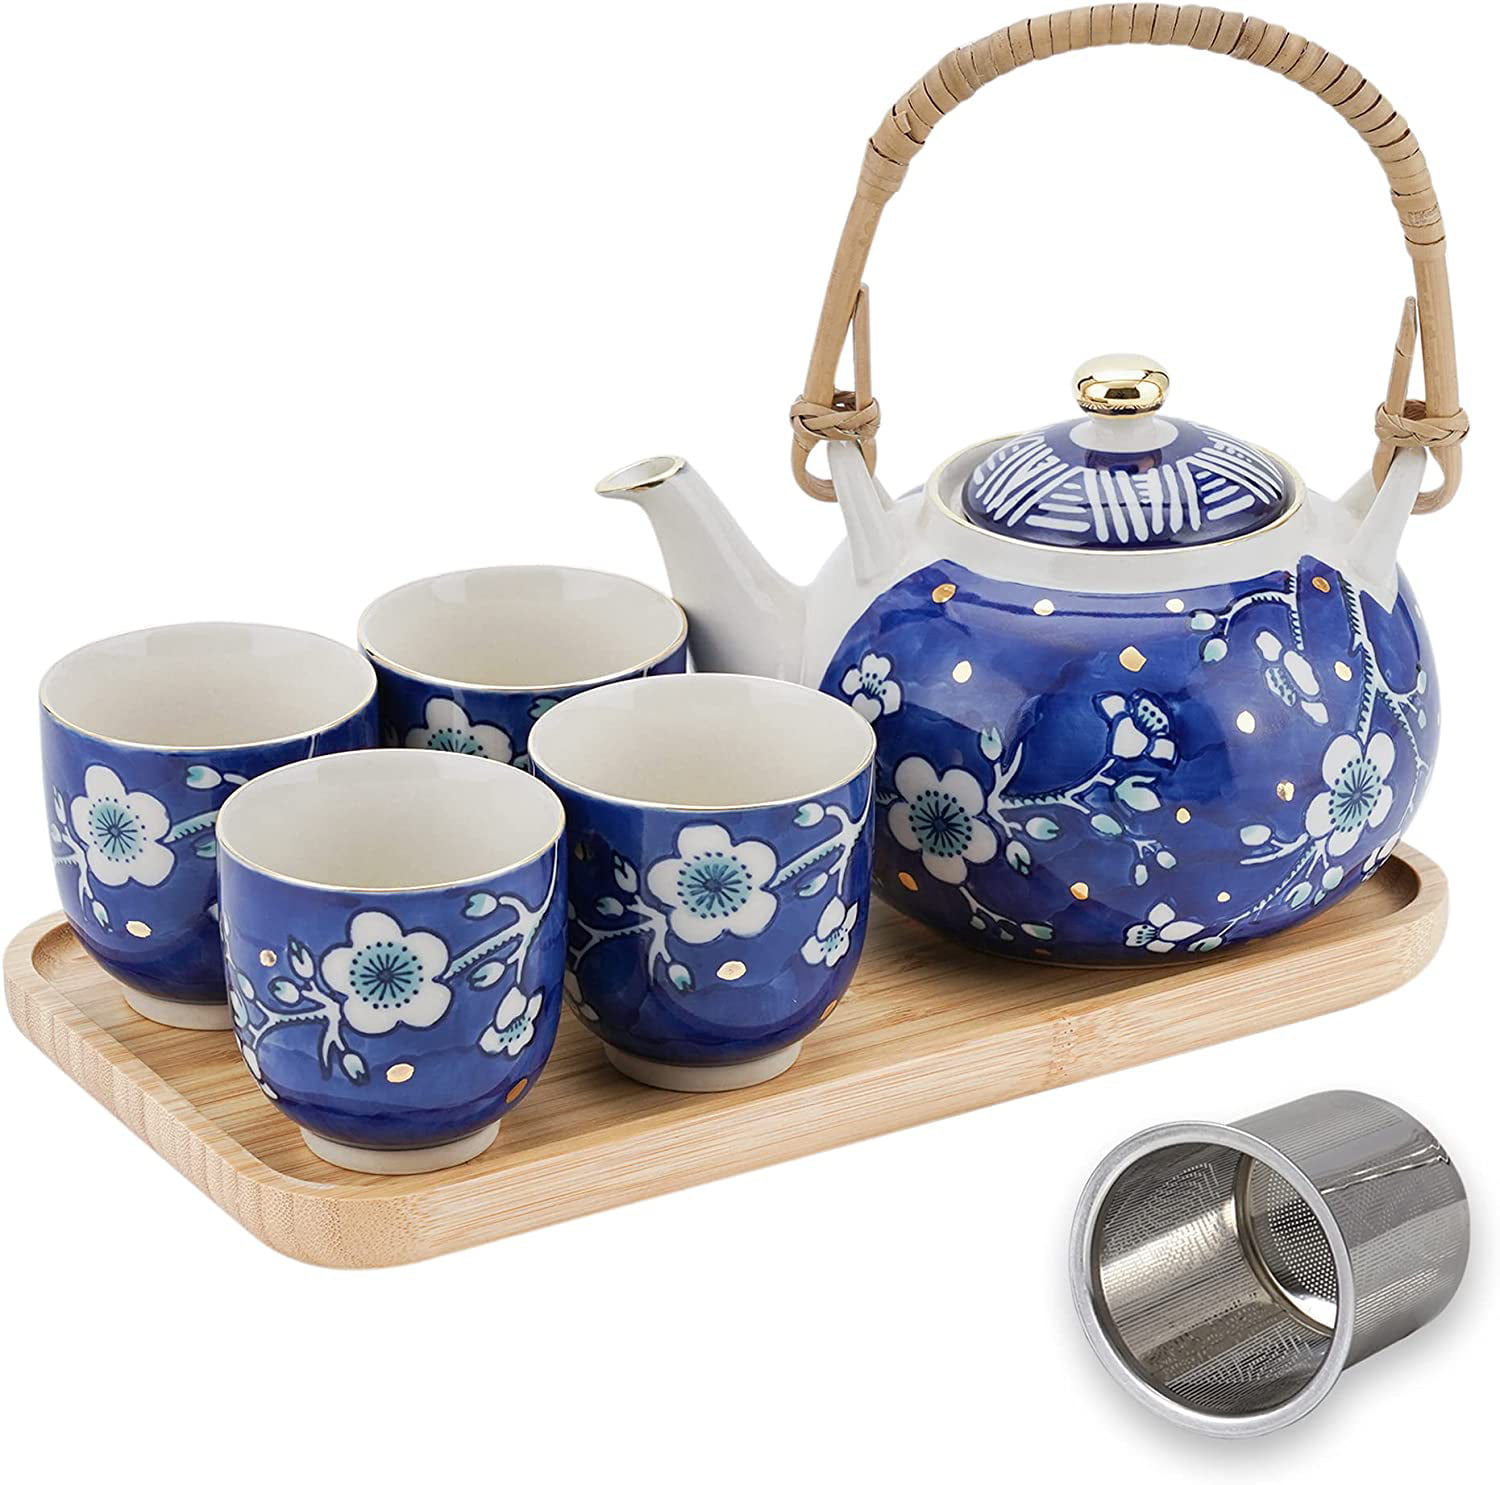 Japanese Tea Set, Ceramic Tea Sets with 1 Teapot, 4 Tea Cups, 1